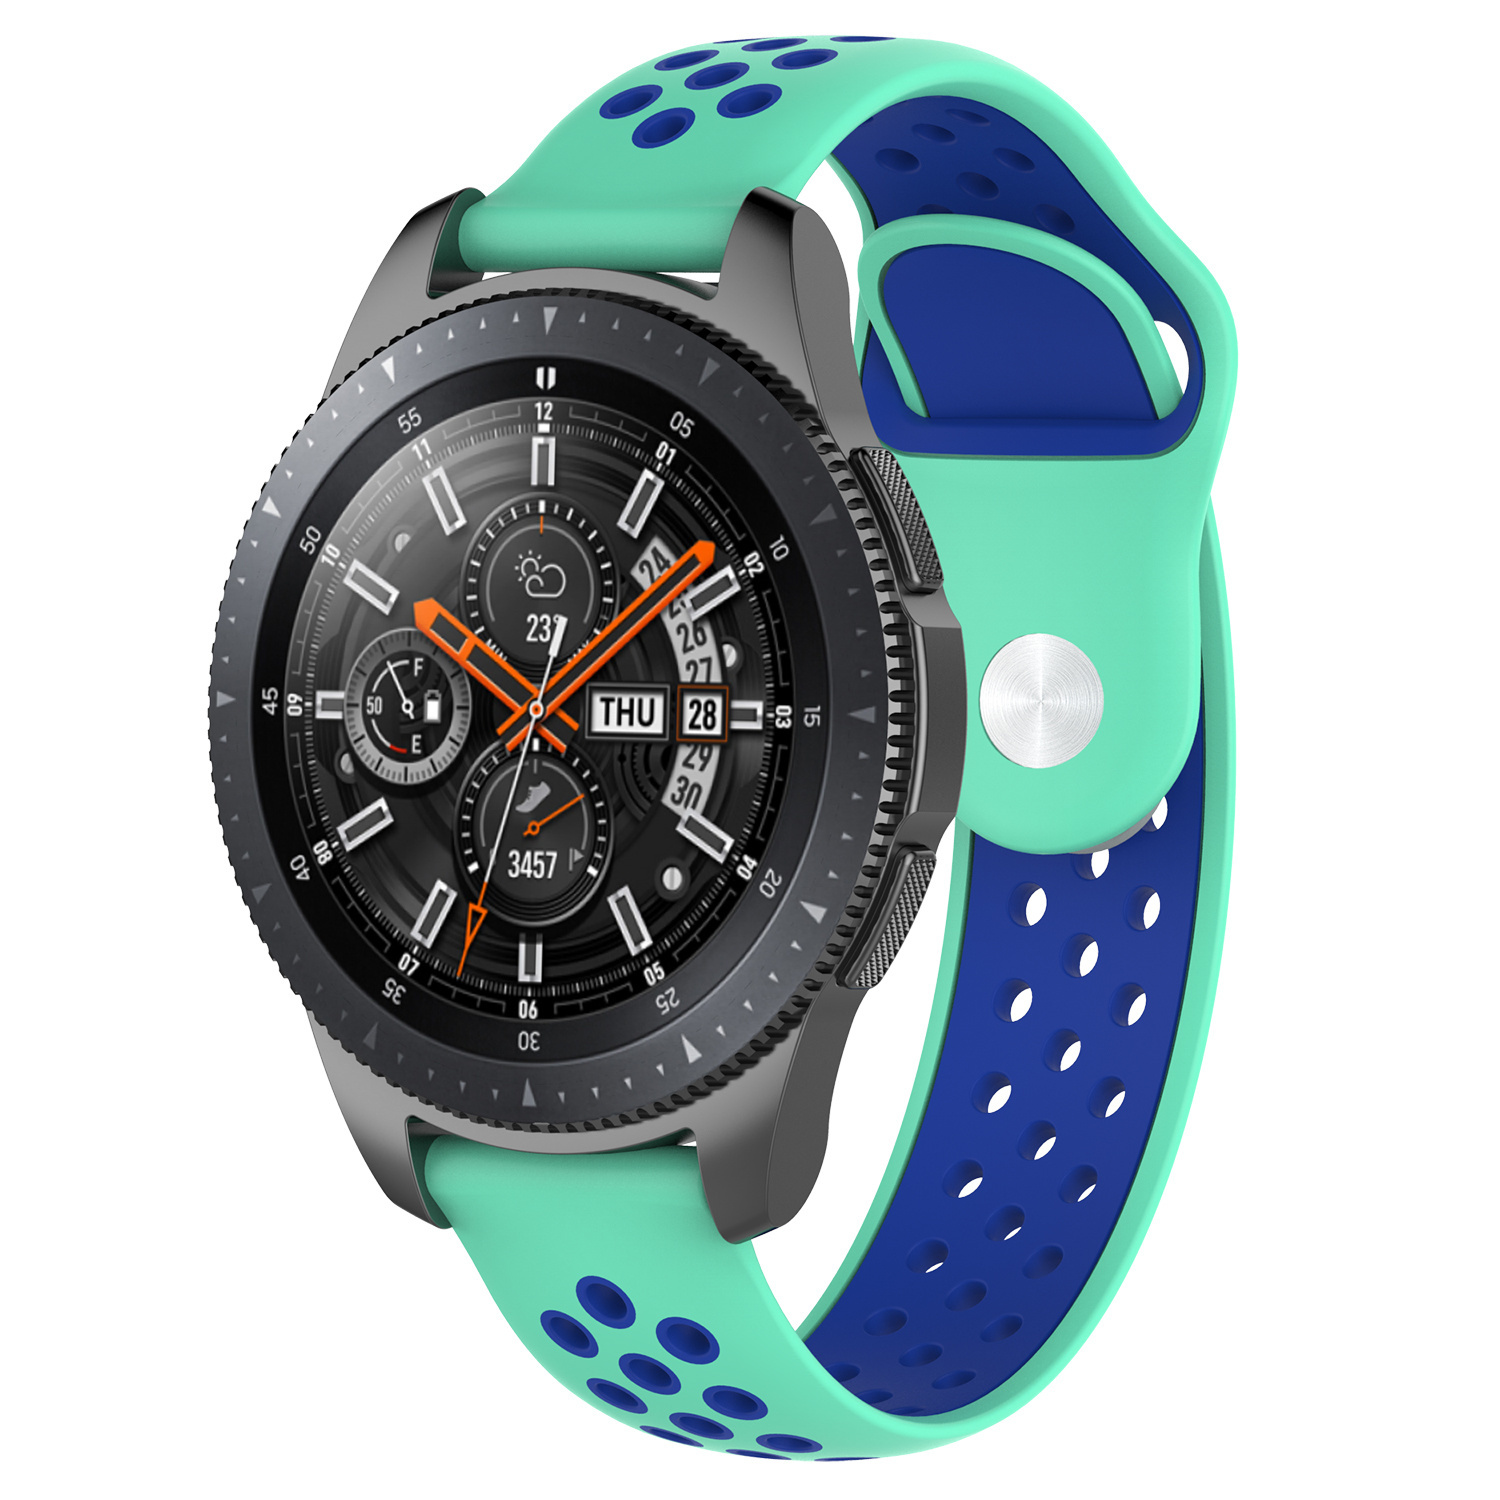 Cinturino doppio sport per Samsung Galaxy Watch - blu acqua